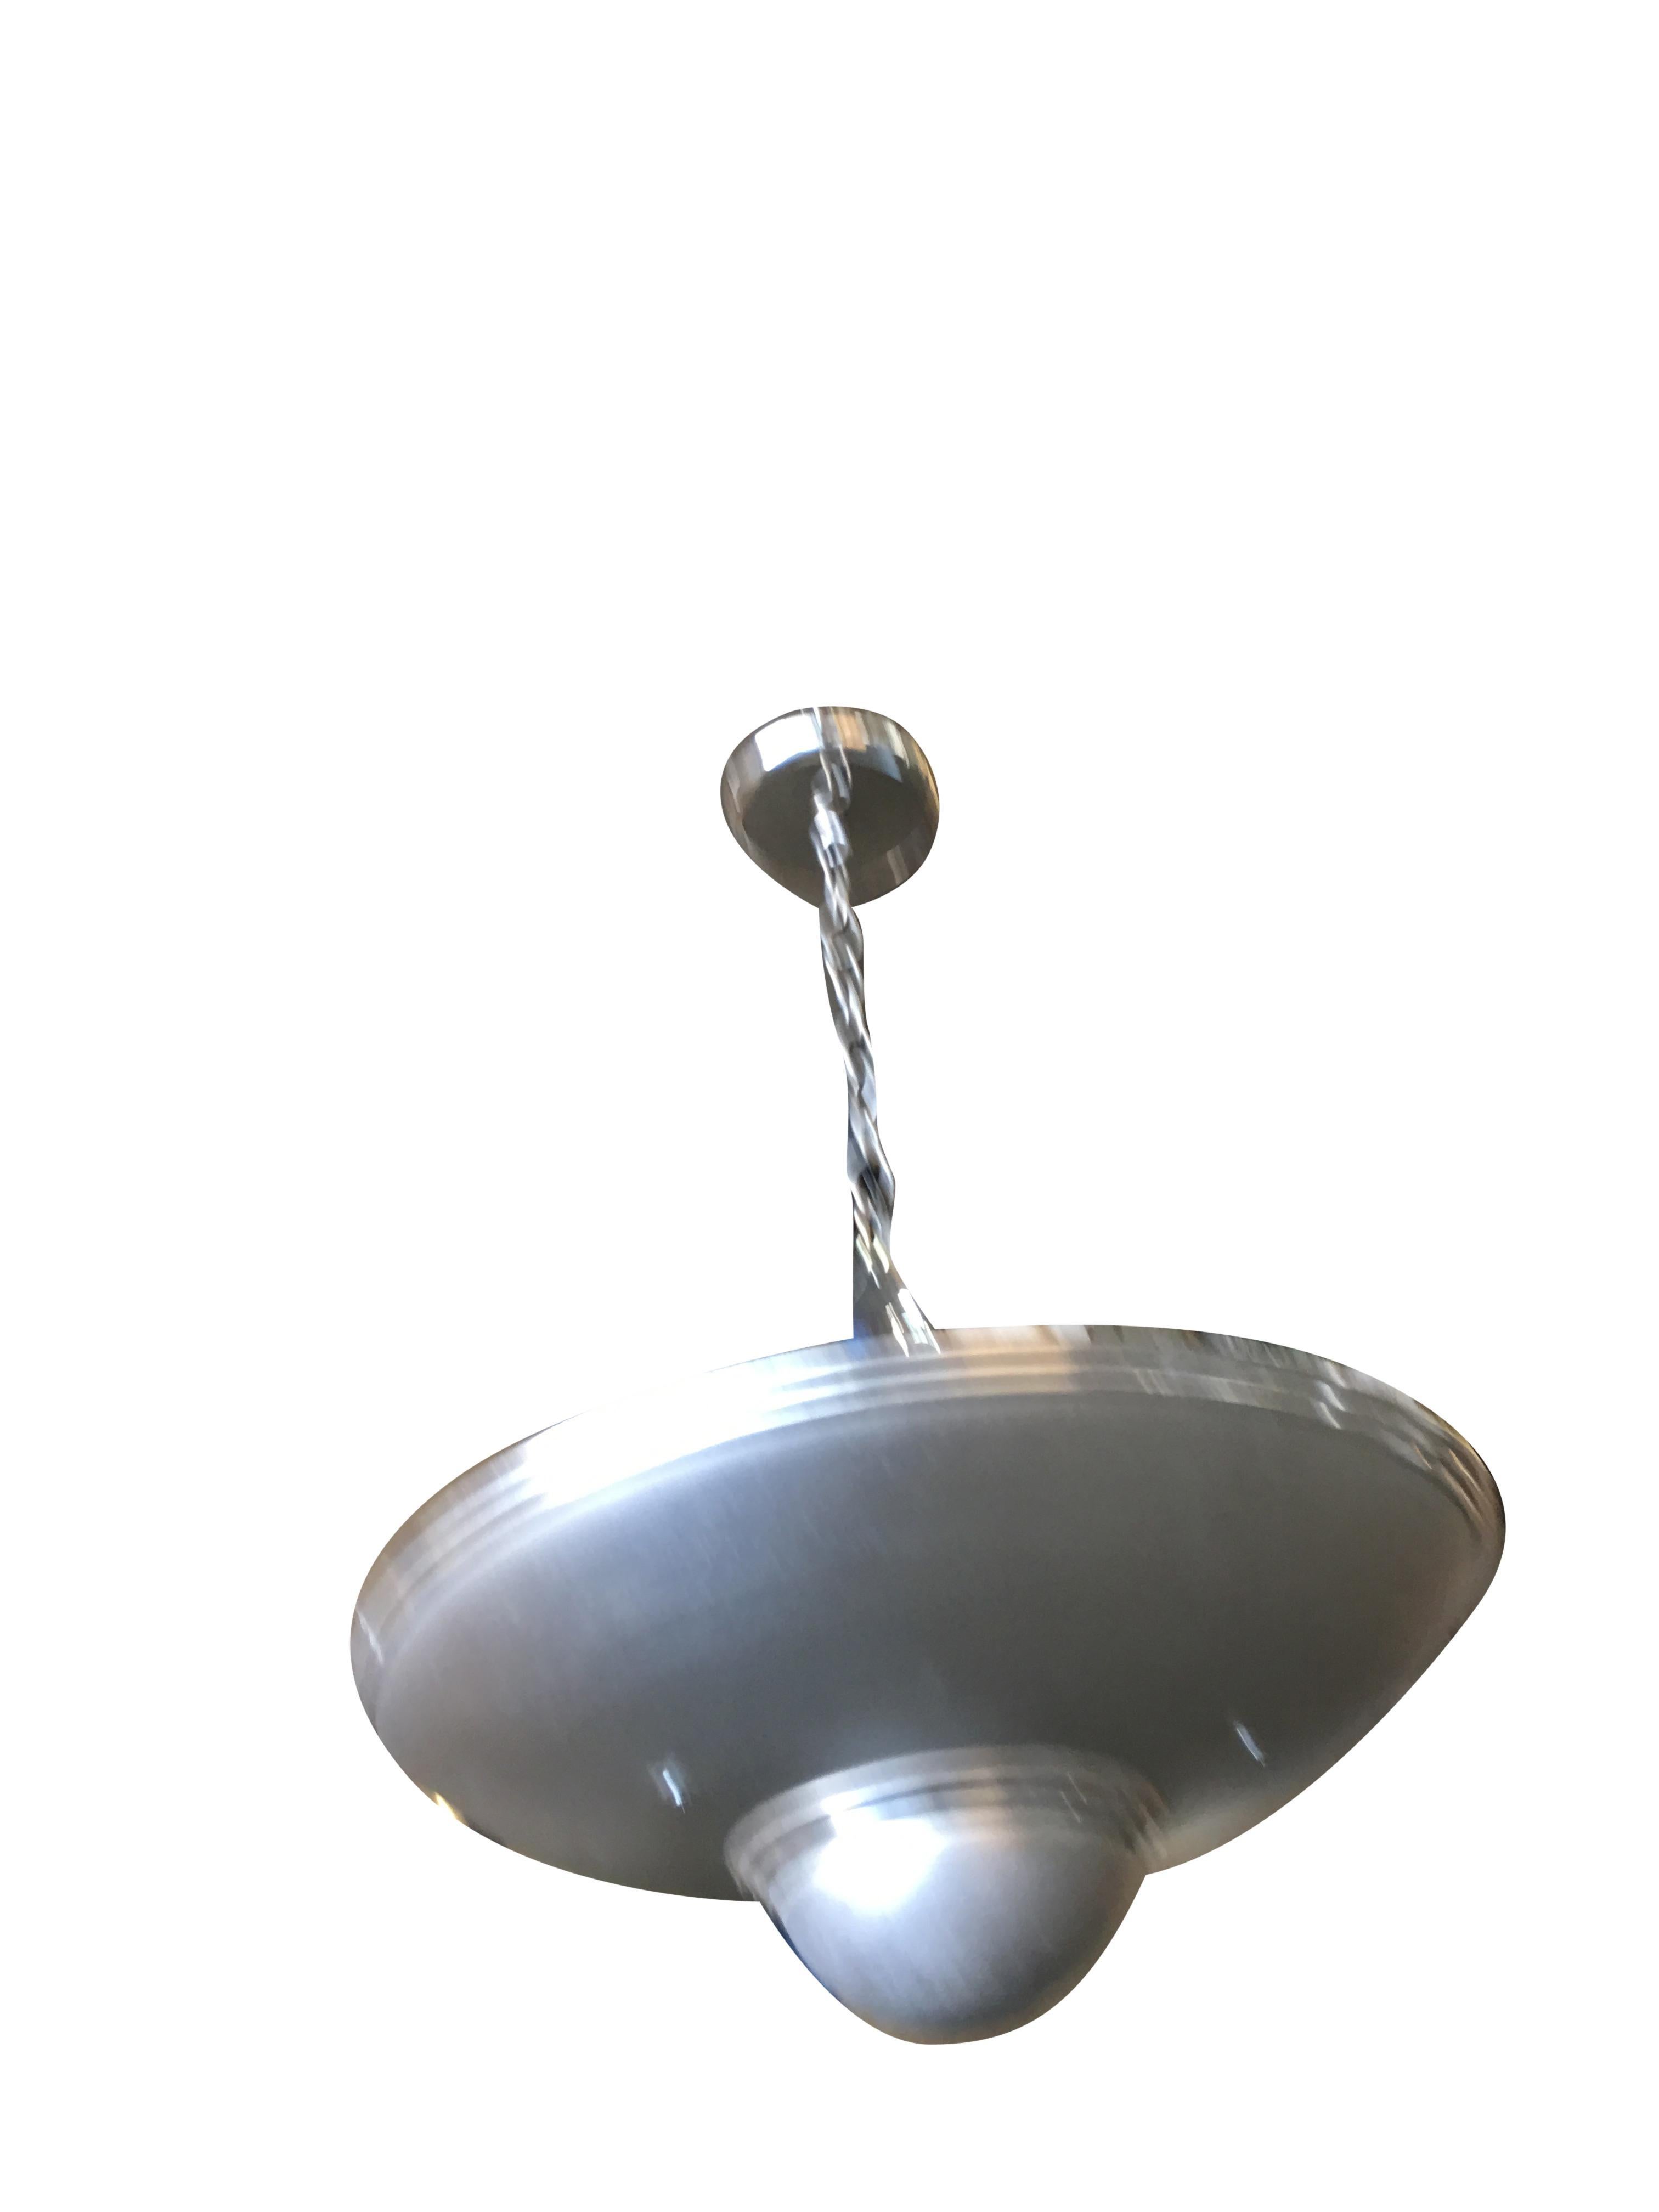 Vintage 1930s aluminium Art Deco saucer-shaped hanging ceiling lamp. Disponible 2.